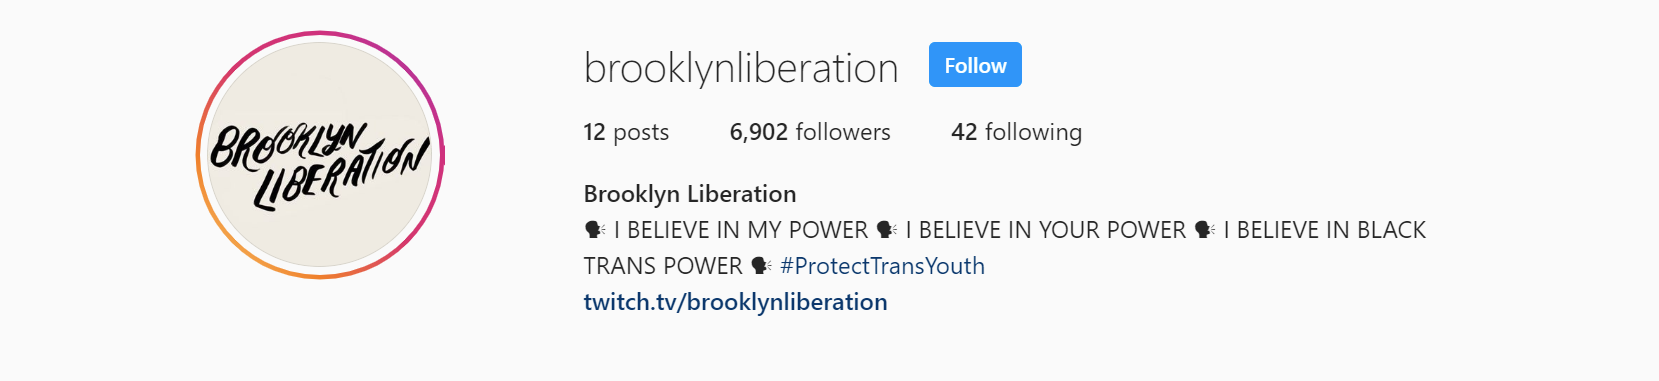 Brooklyn Liberation